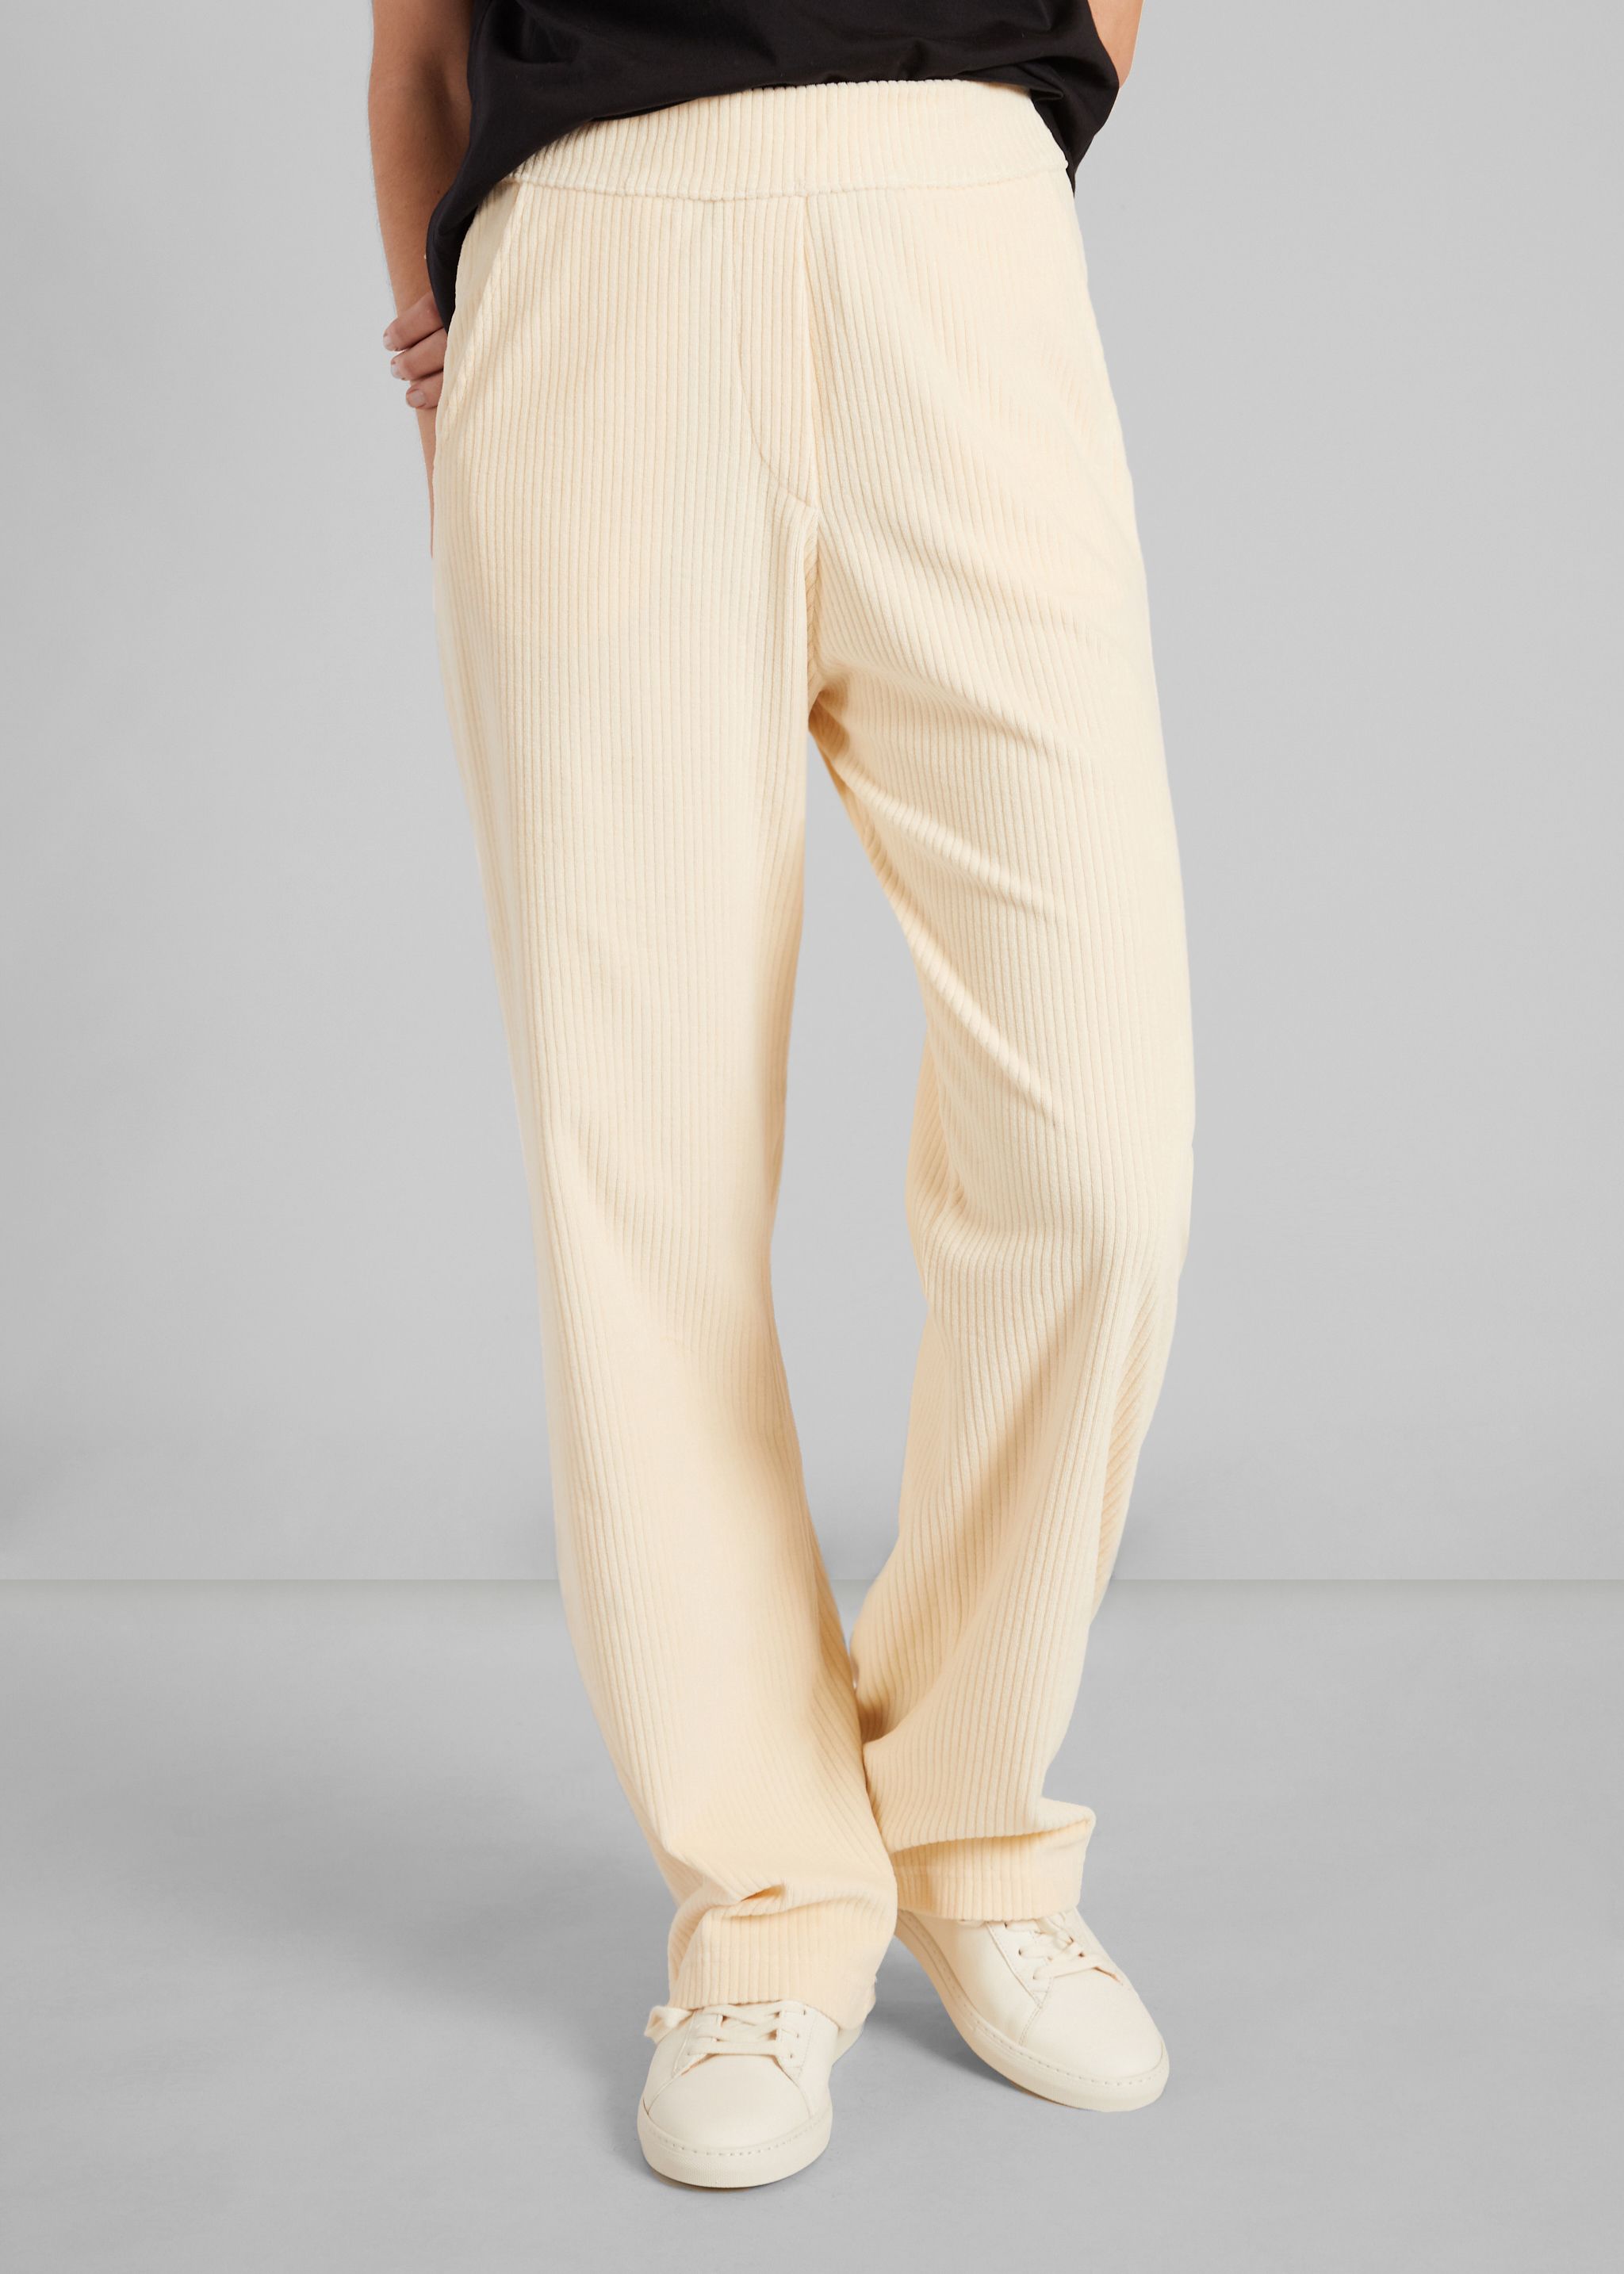 Regular Fit Corduroy Pants - Light beige - Men | H&M US